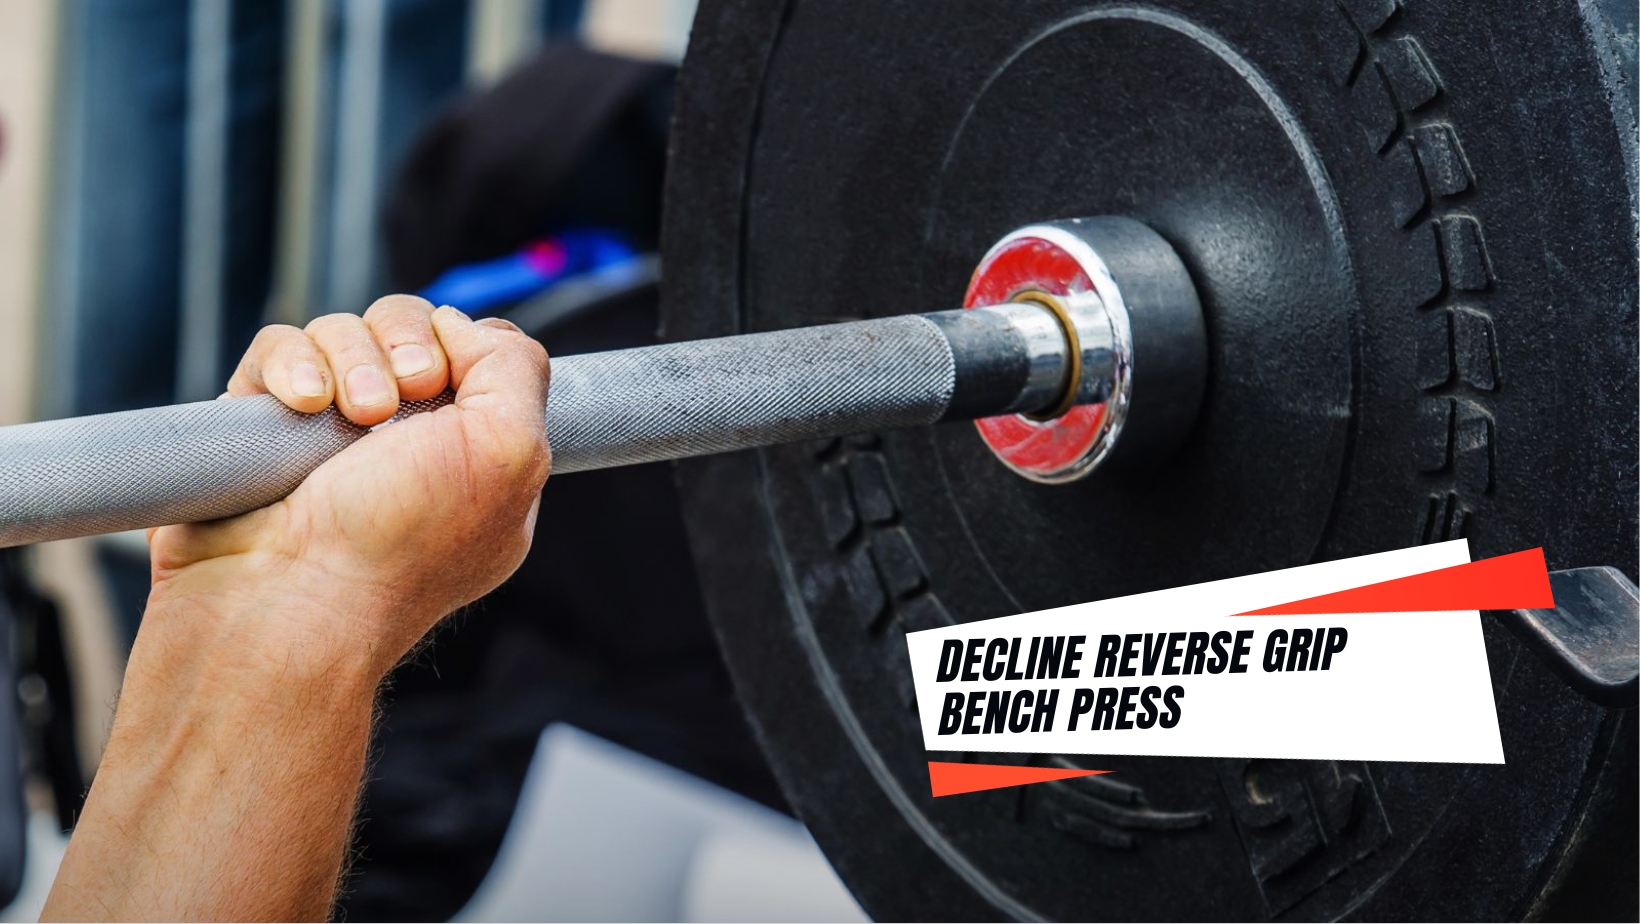 Decline Reverse Grip Bench Press